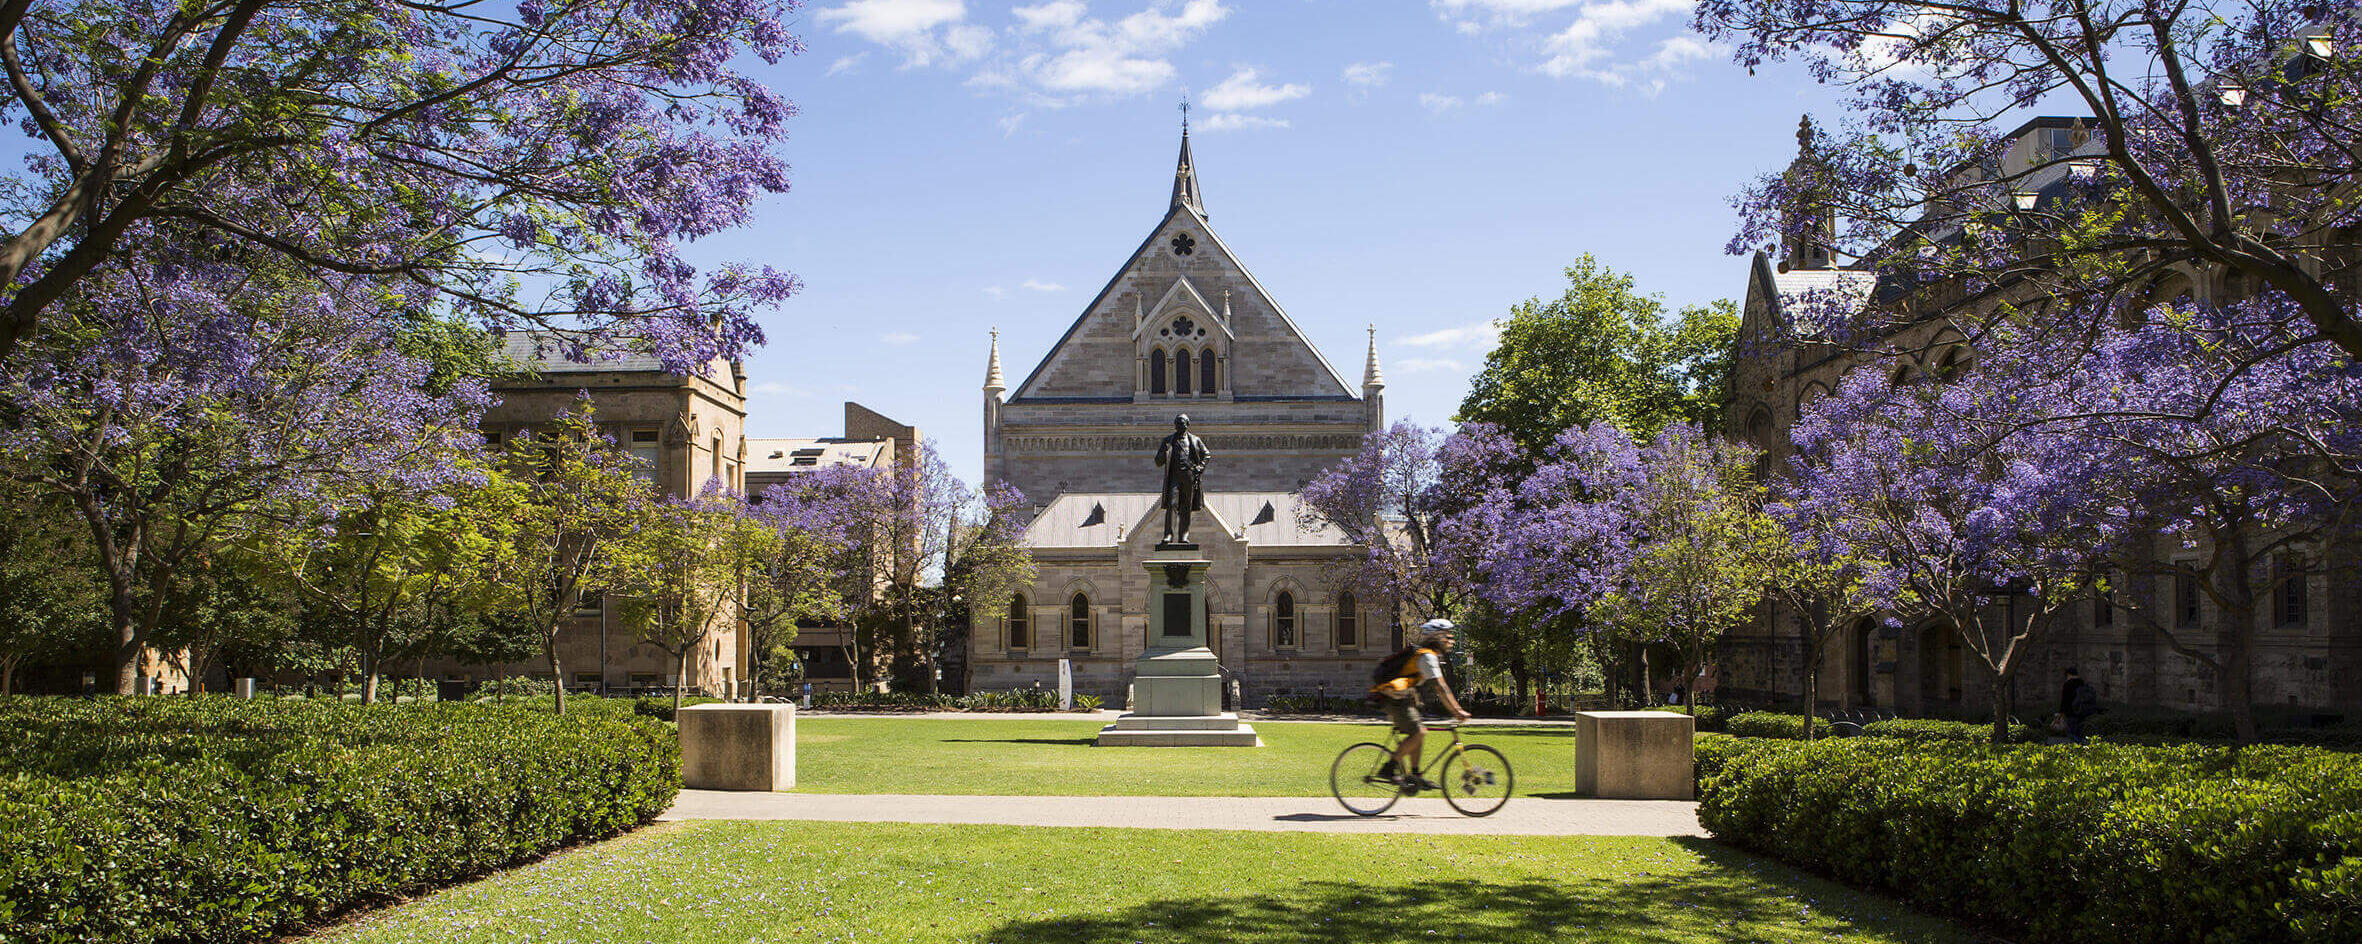 Campus North Terrace der University of Adelaide im Frühling